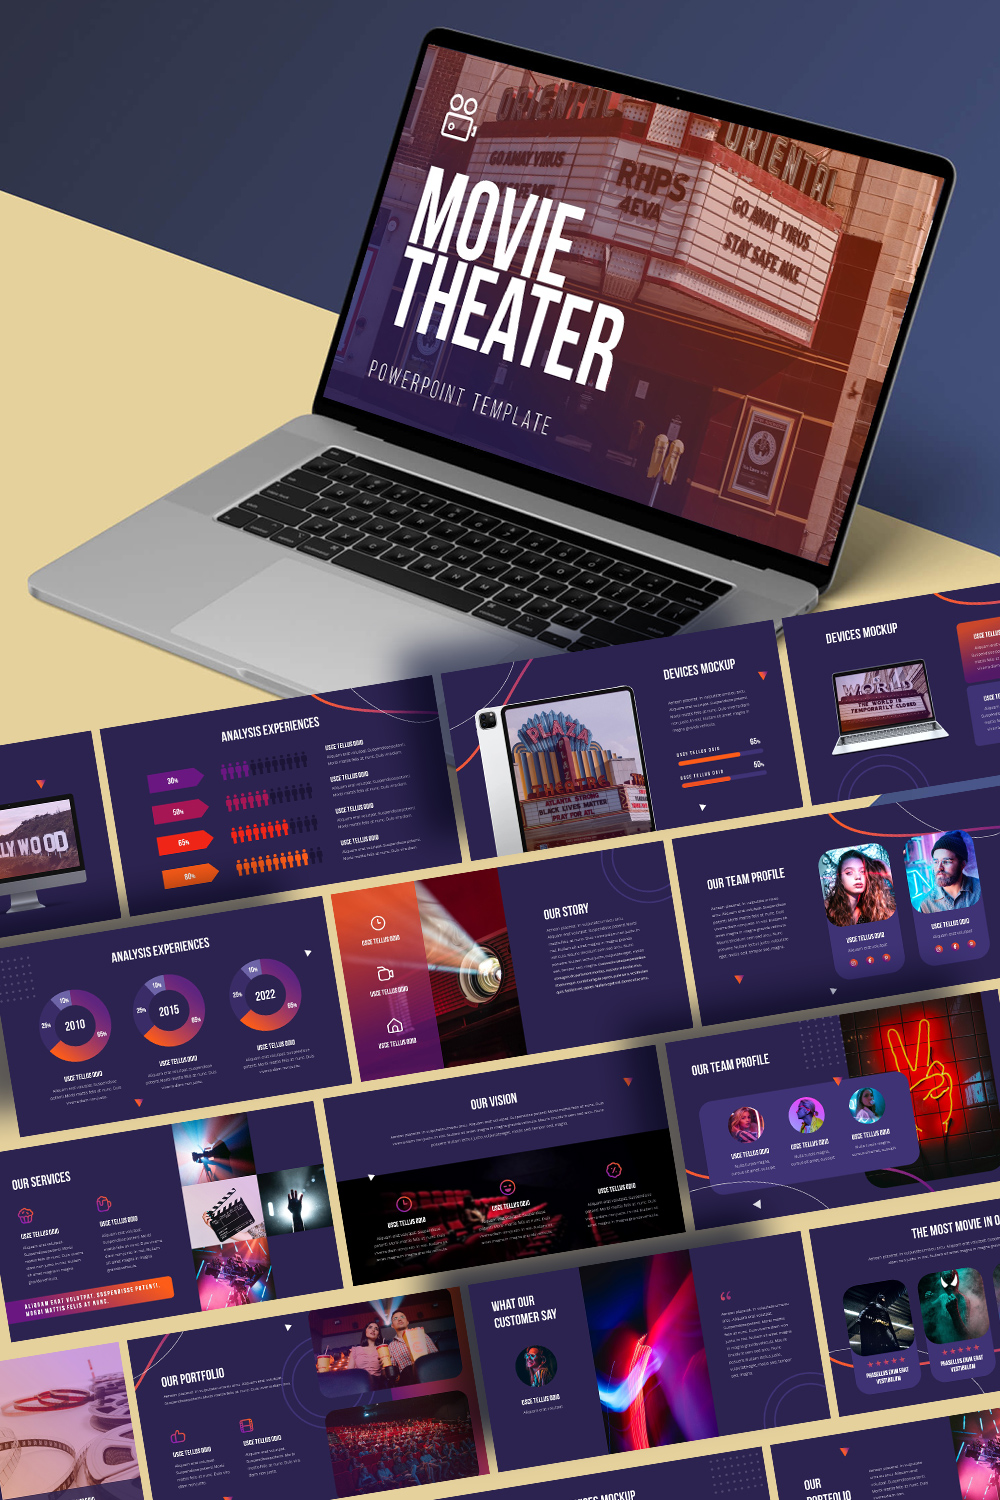 Movie Theater Powerpoint Template - Pinterest.